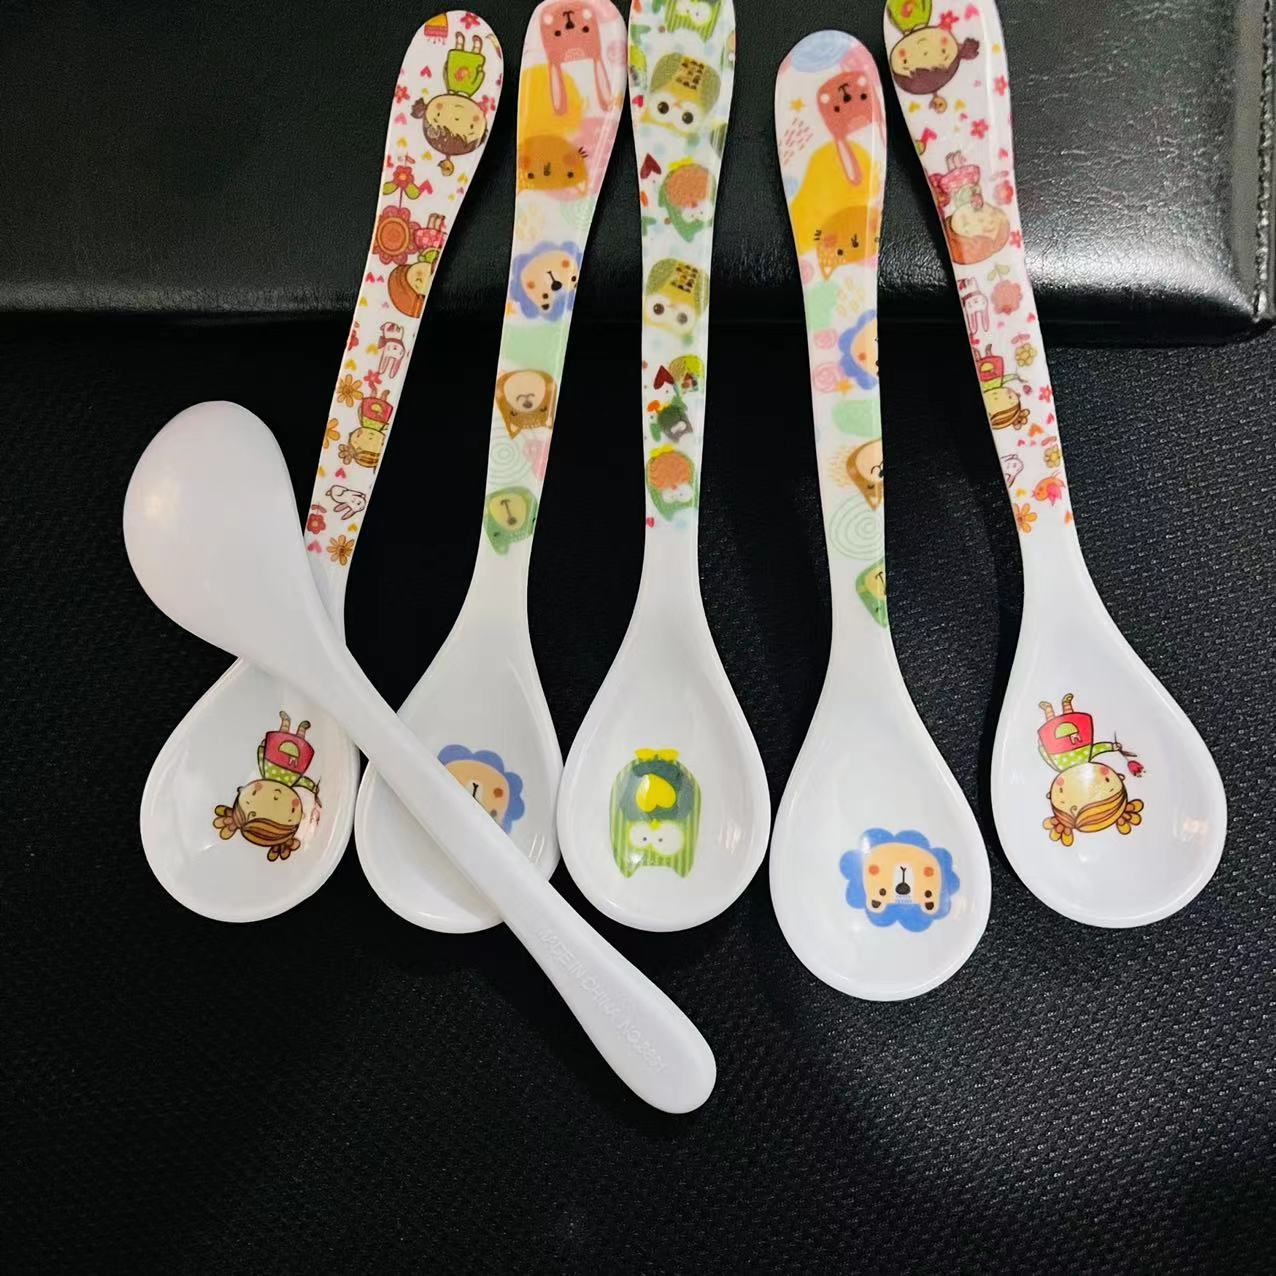 8891 Children Spoon Melamine Spoon Long Handle Spoon with Hook Spoon Flat-Bottom Spoon Spicy Hot Spoon Soup Spoon Spoon Spoon One Yuan Supply